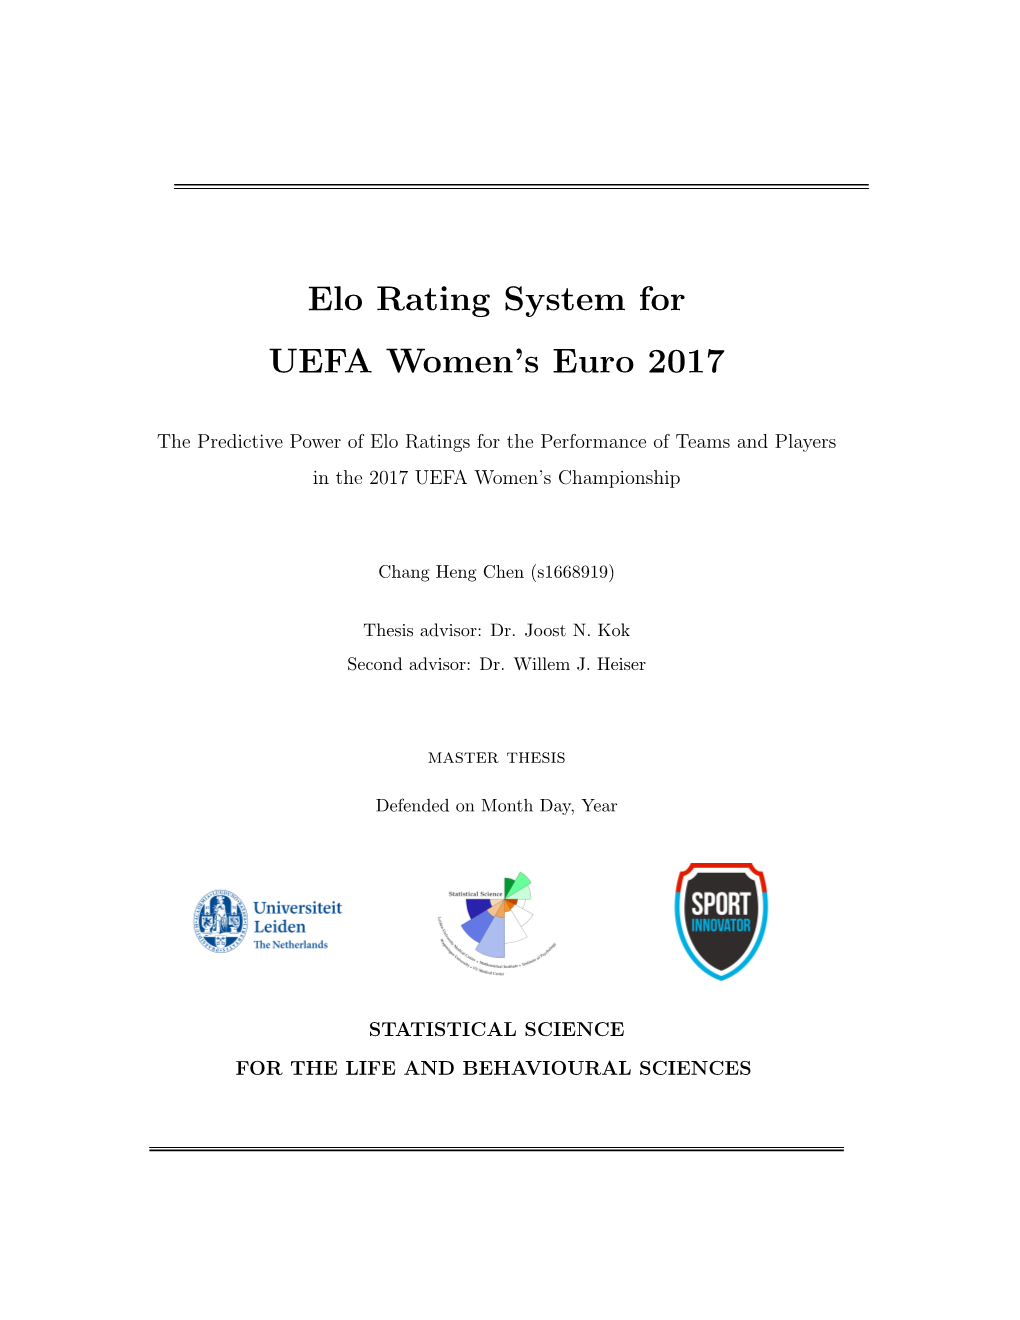 Elo Rating System for UEFA Women's Euro 2017